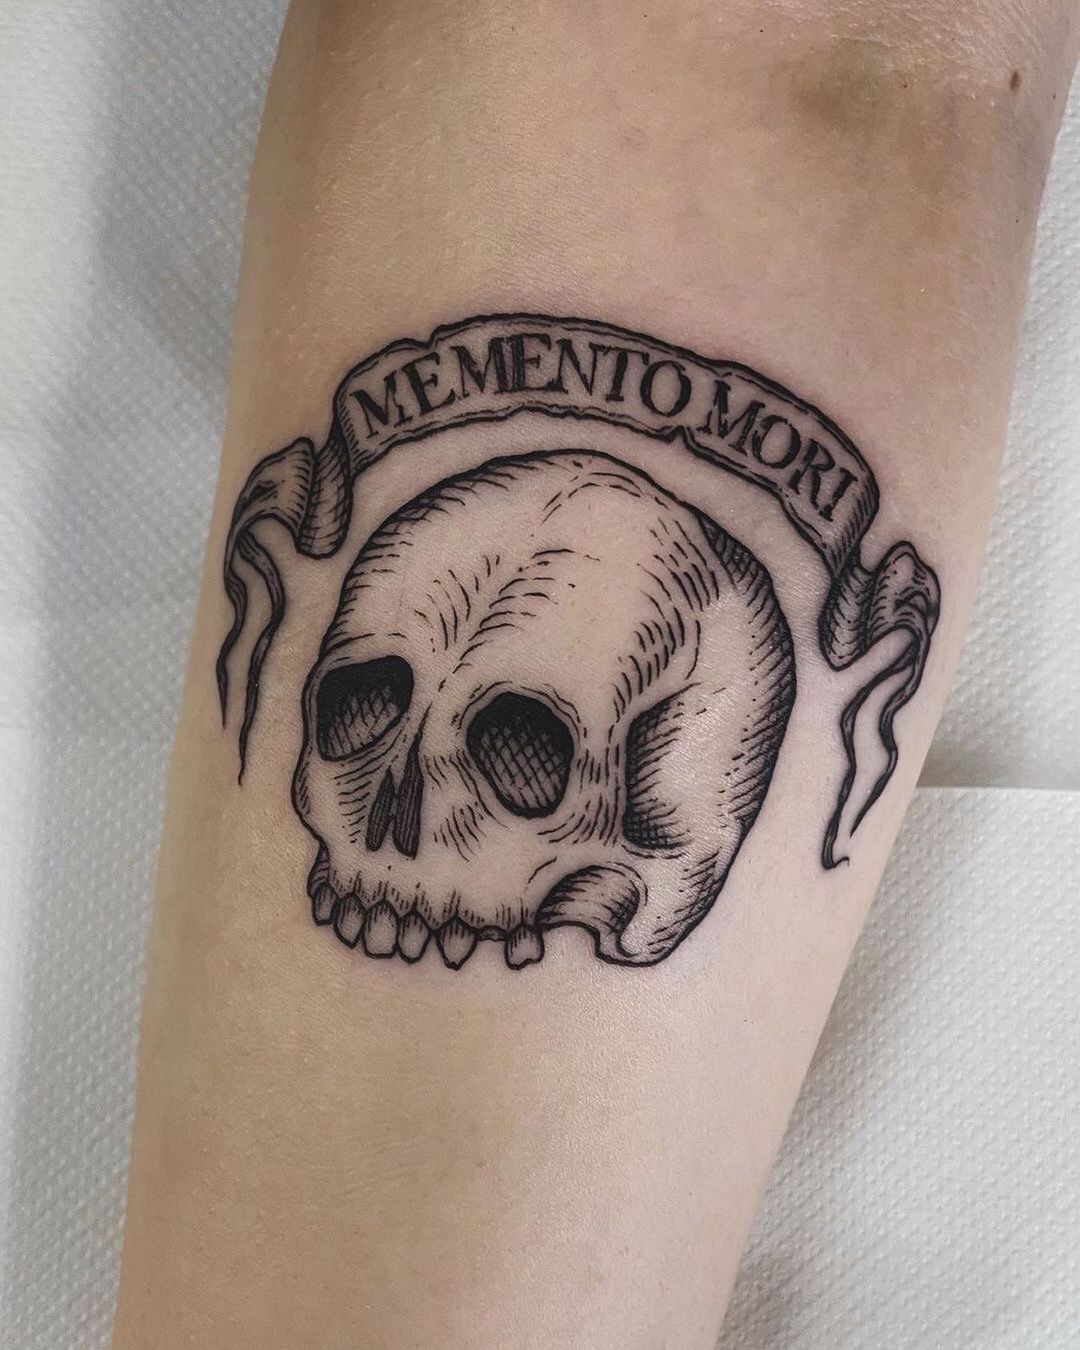 Traditional Memento Mori Skull Tattoo On Forearm